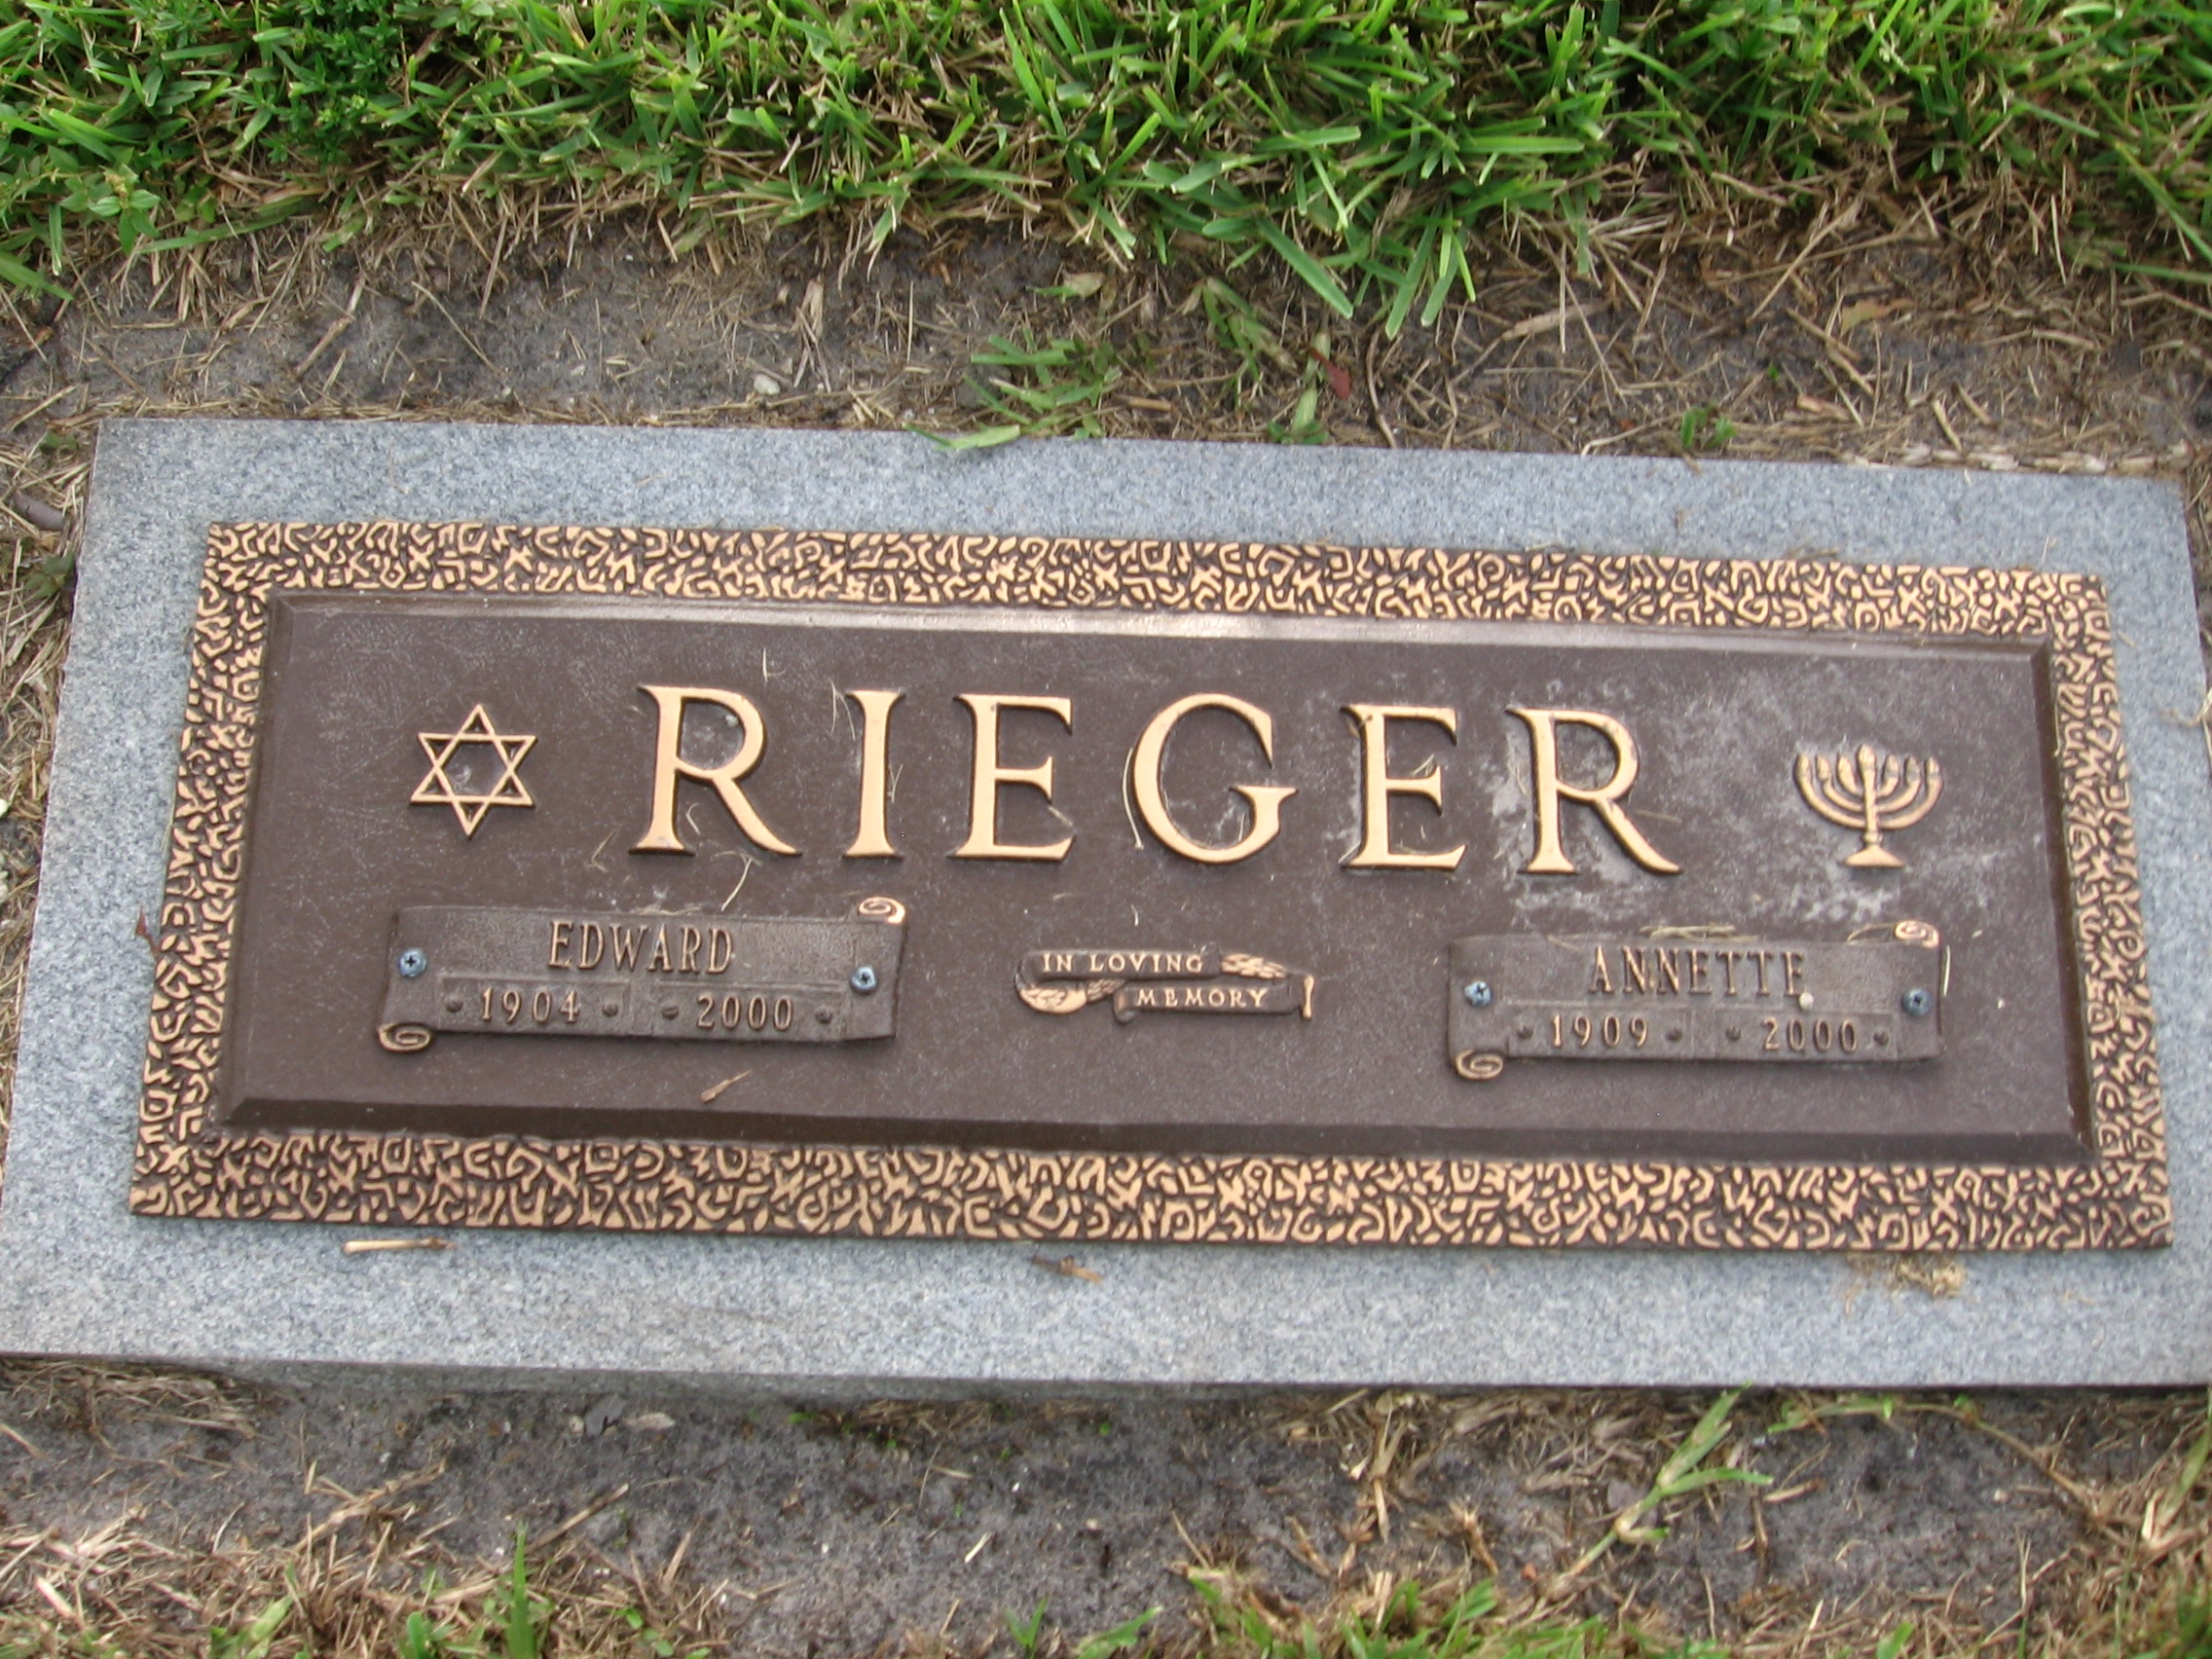 Edward Rieger